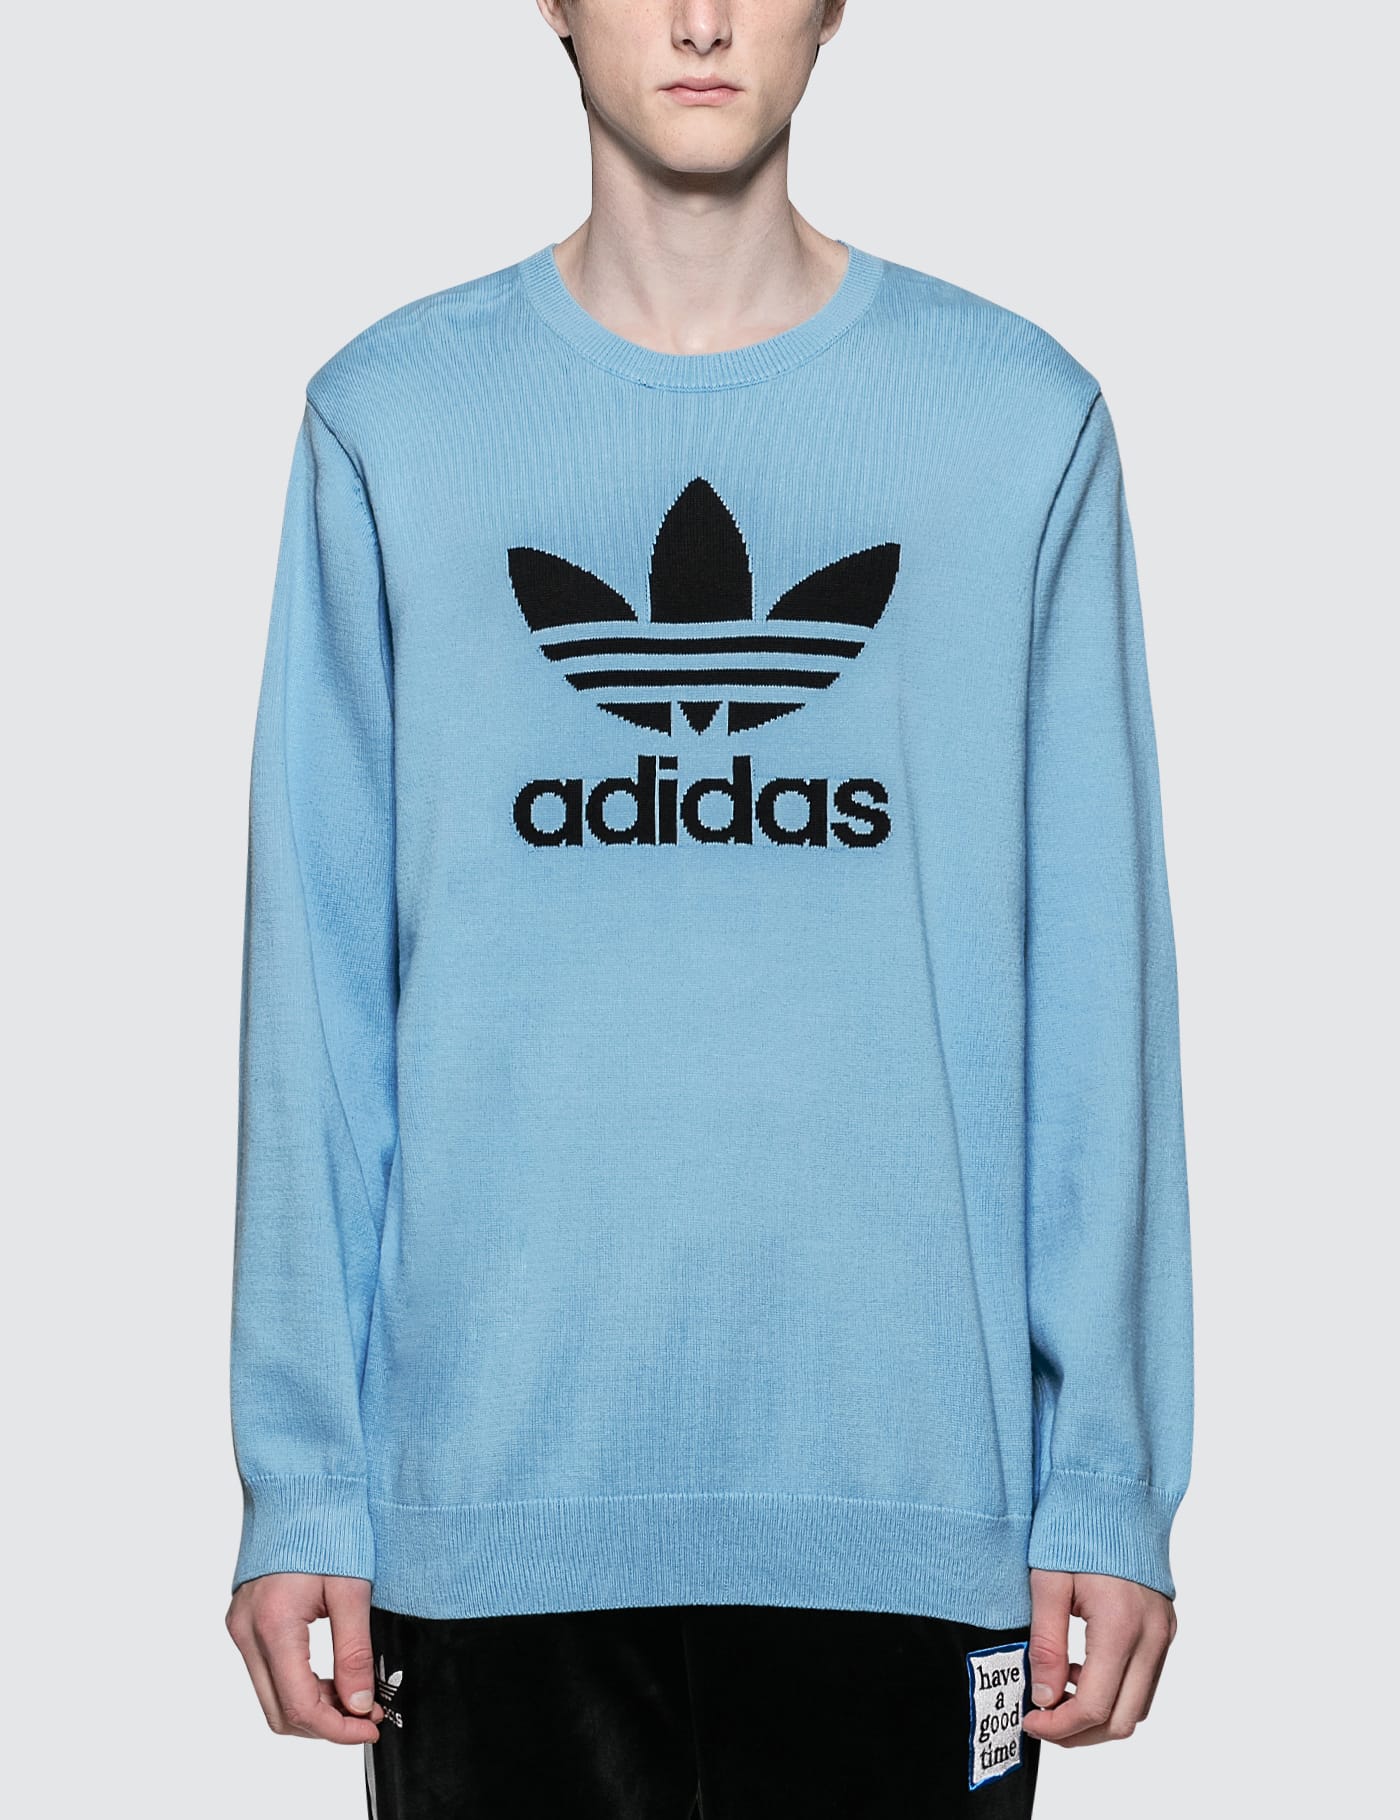 Adidas Originals - Have A Good Time x Adidas Summer Knit Sweater